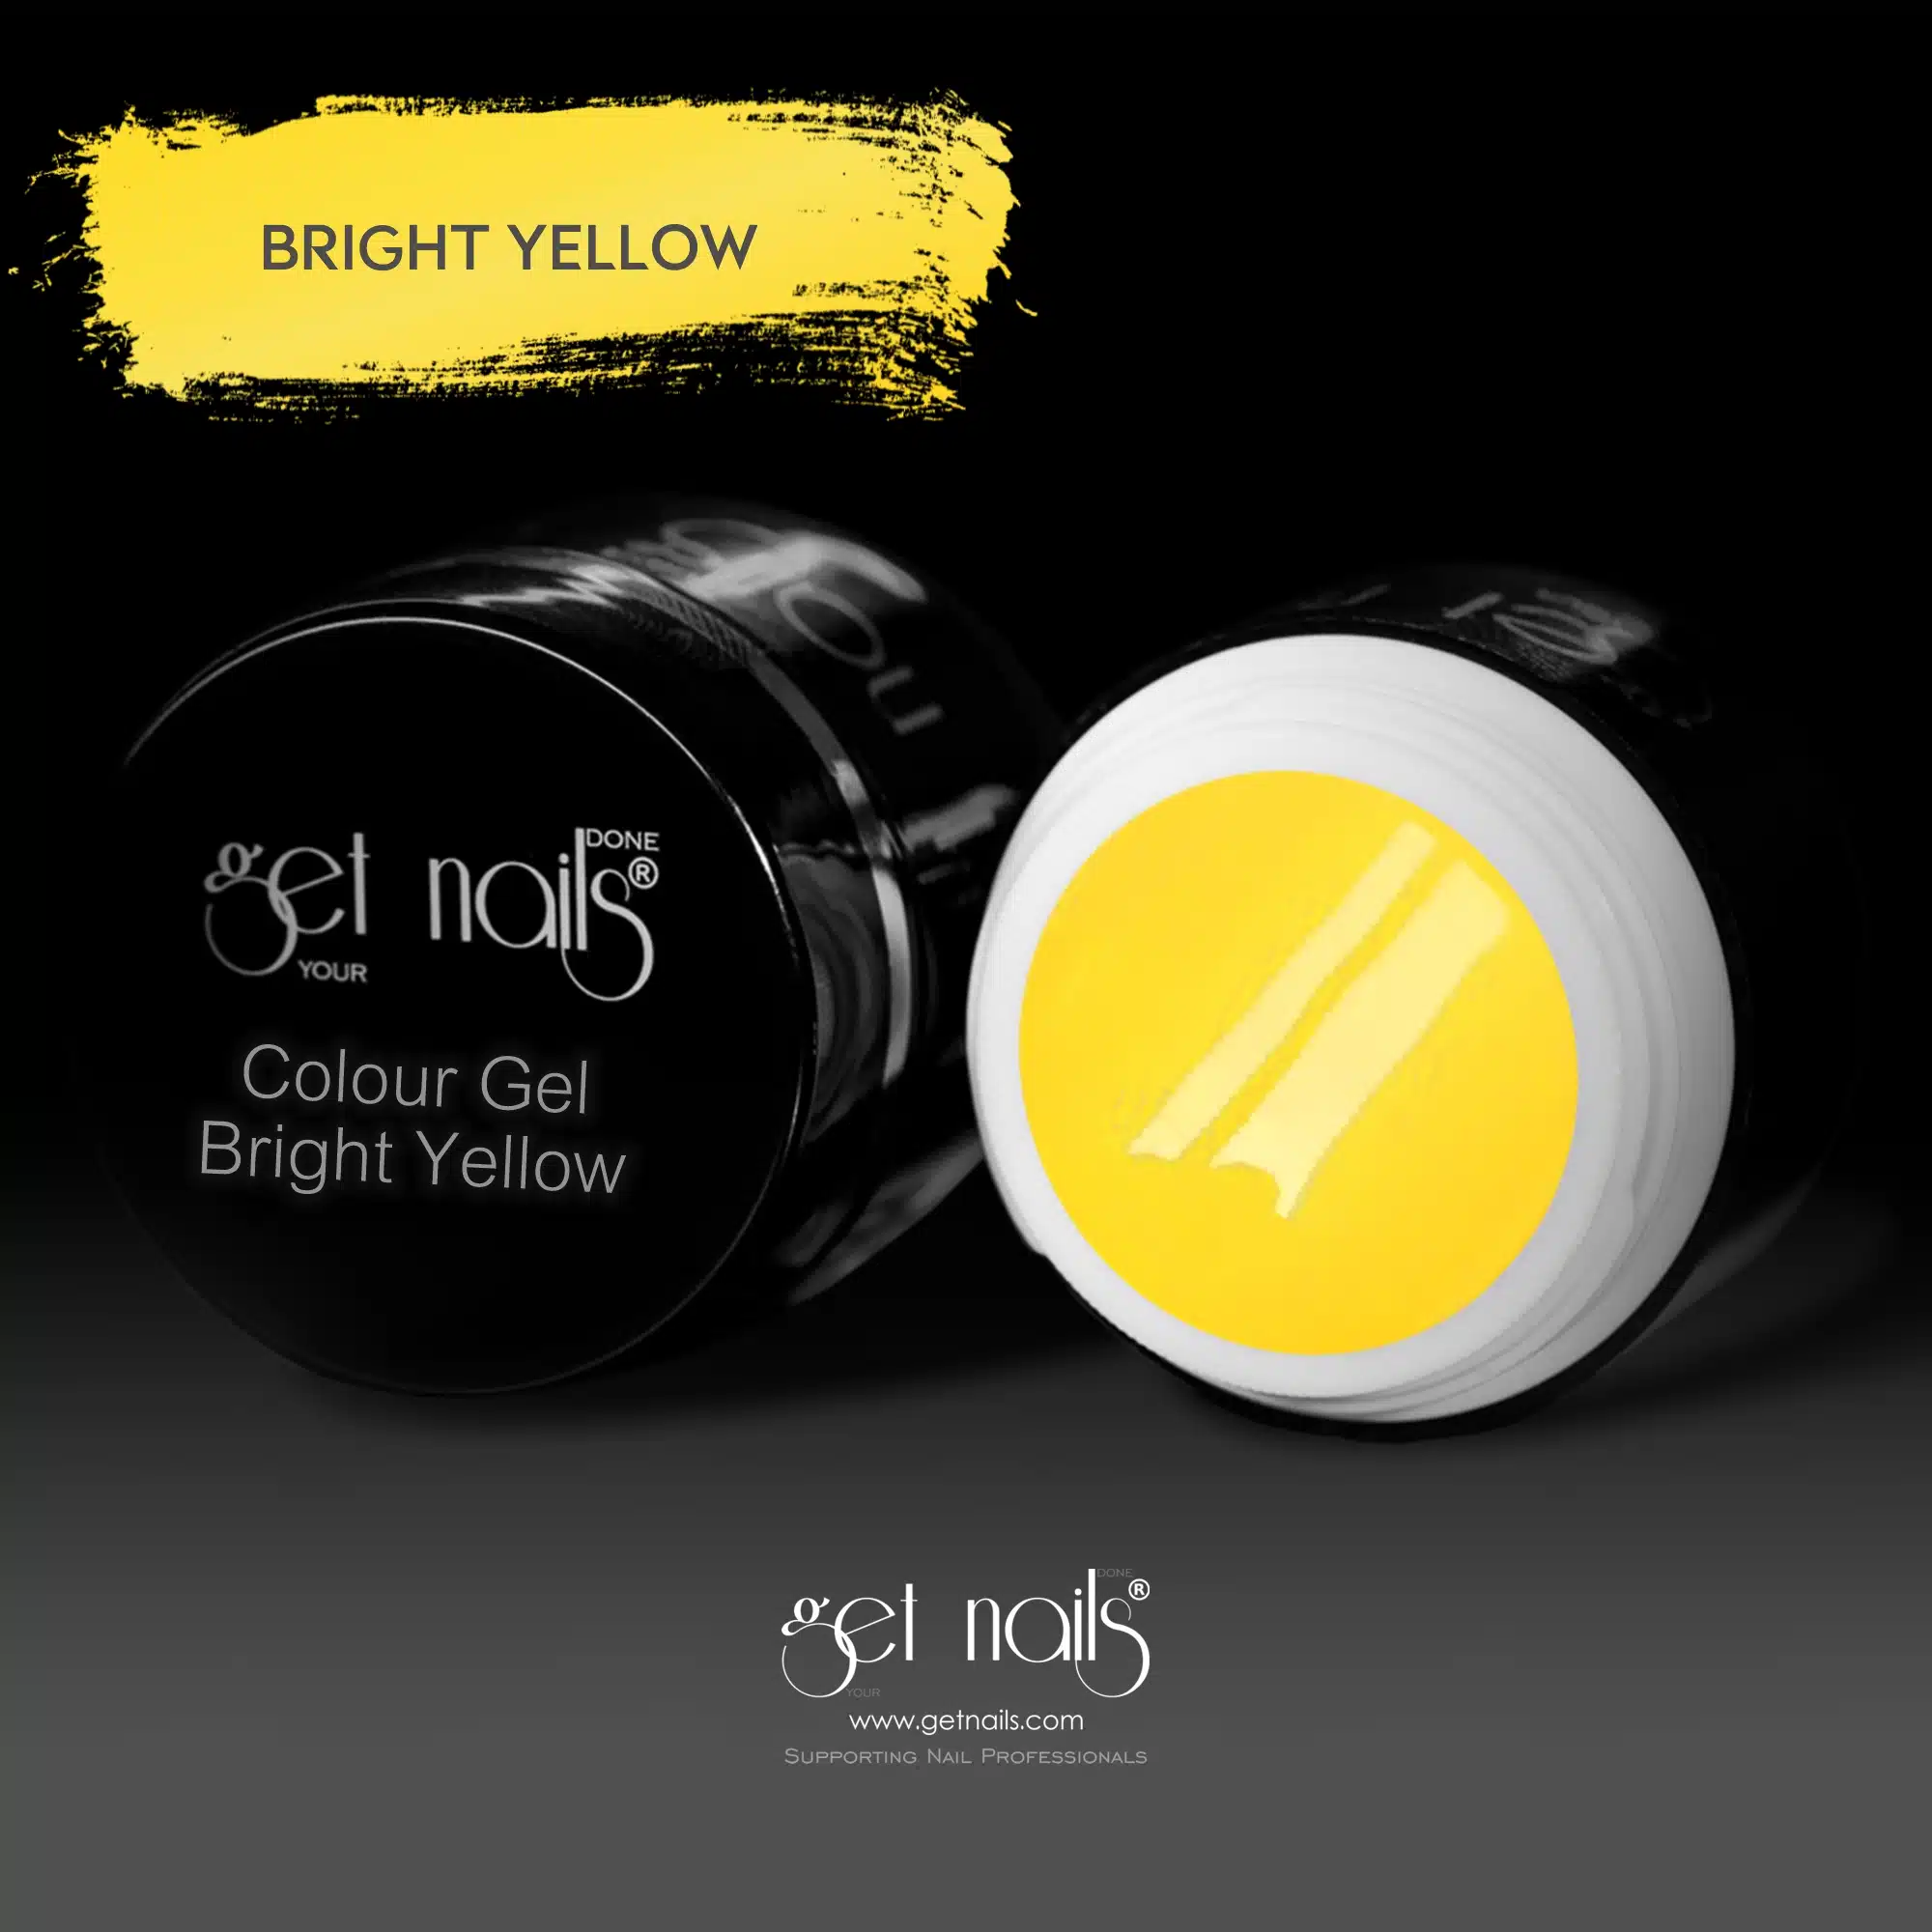 Get Nails Austria - Colour Gel Bright Yellow 5g